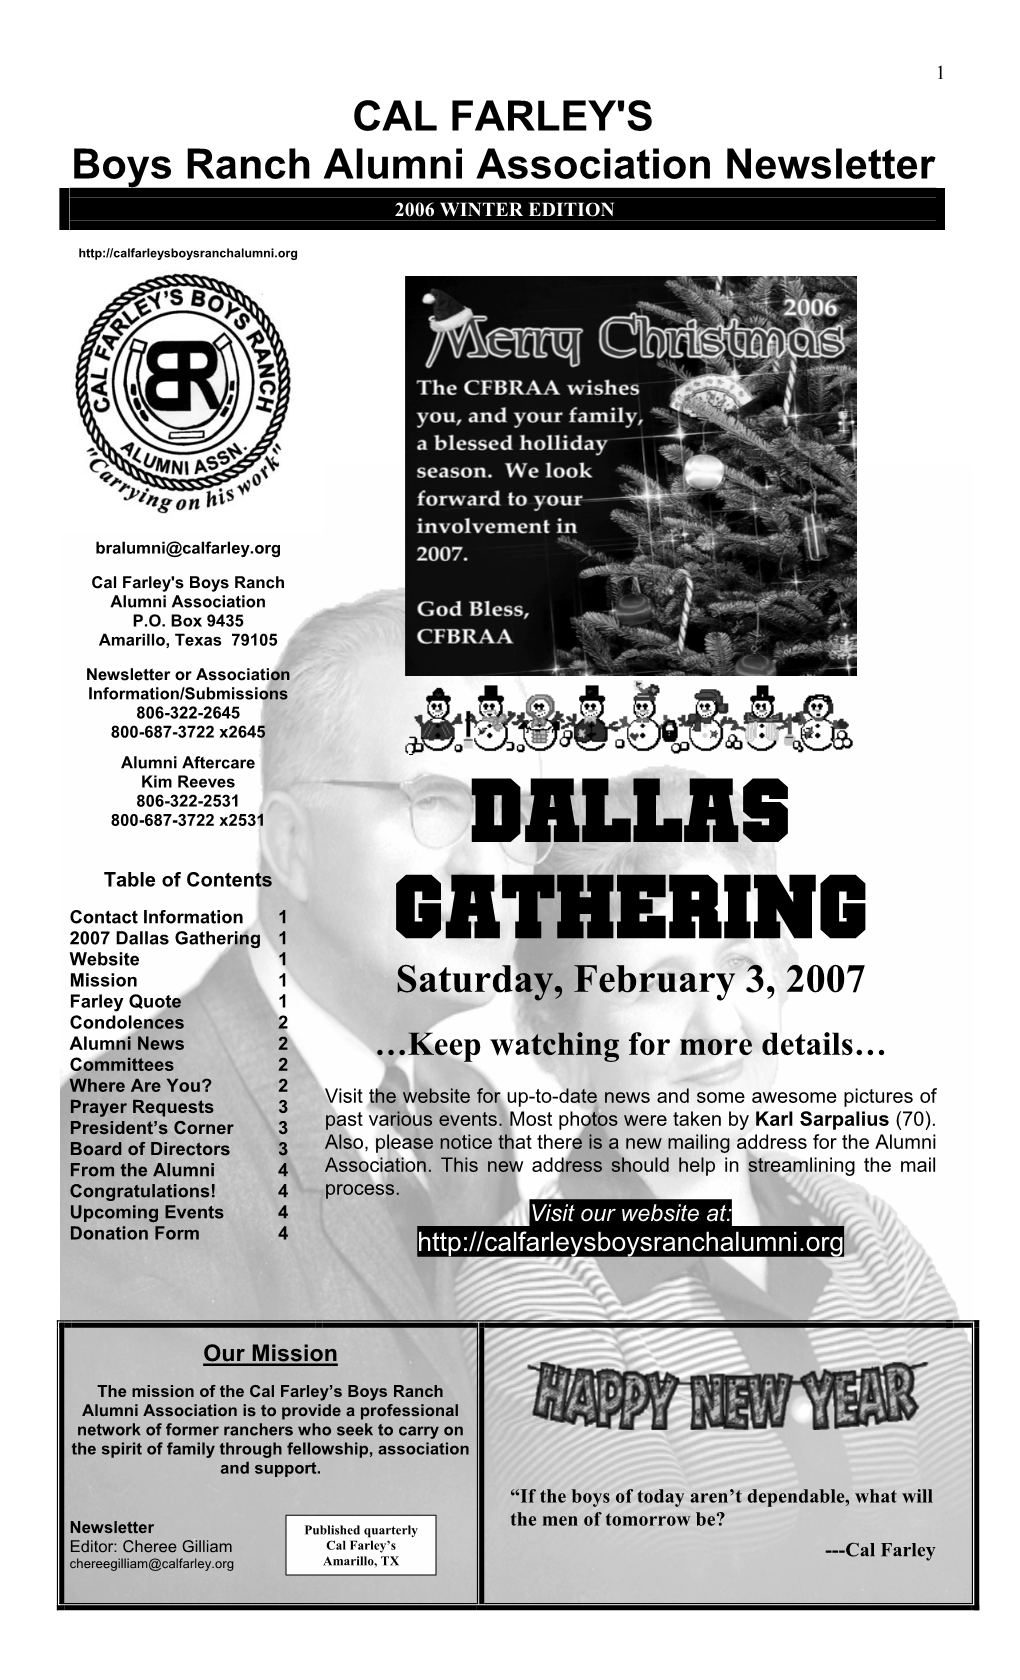 Dallas Gathering